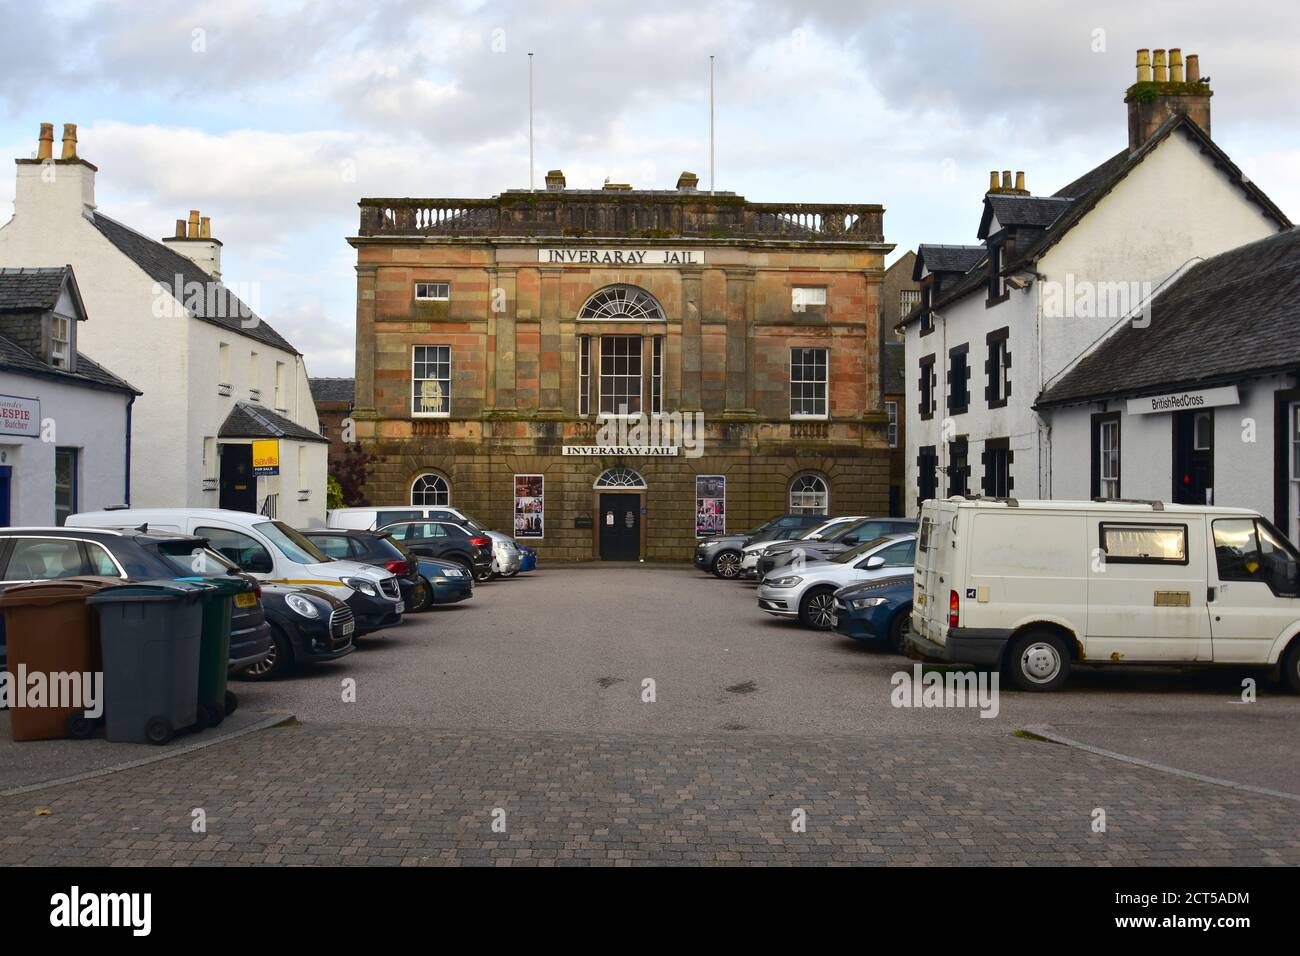 Inveraray Jail, Argyll & Bute, Scotland Stock Photo